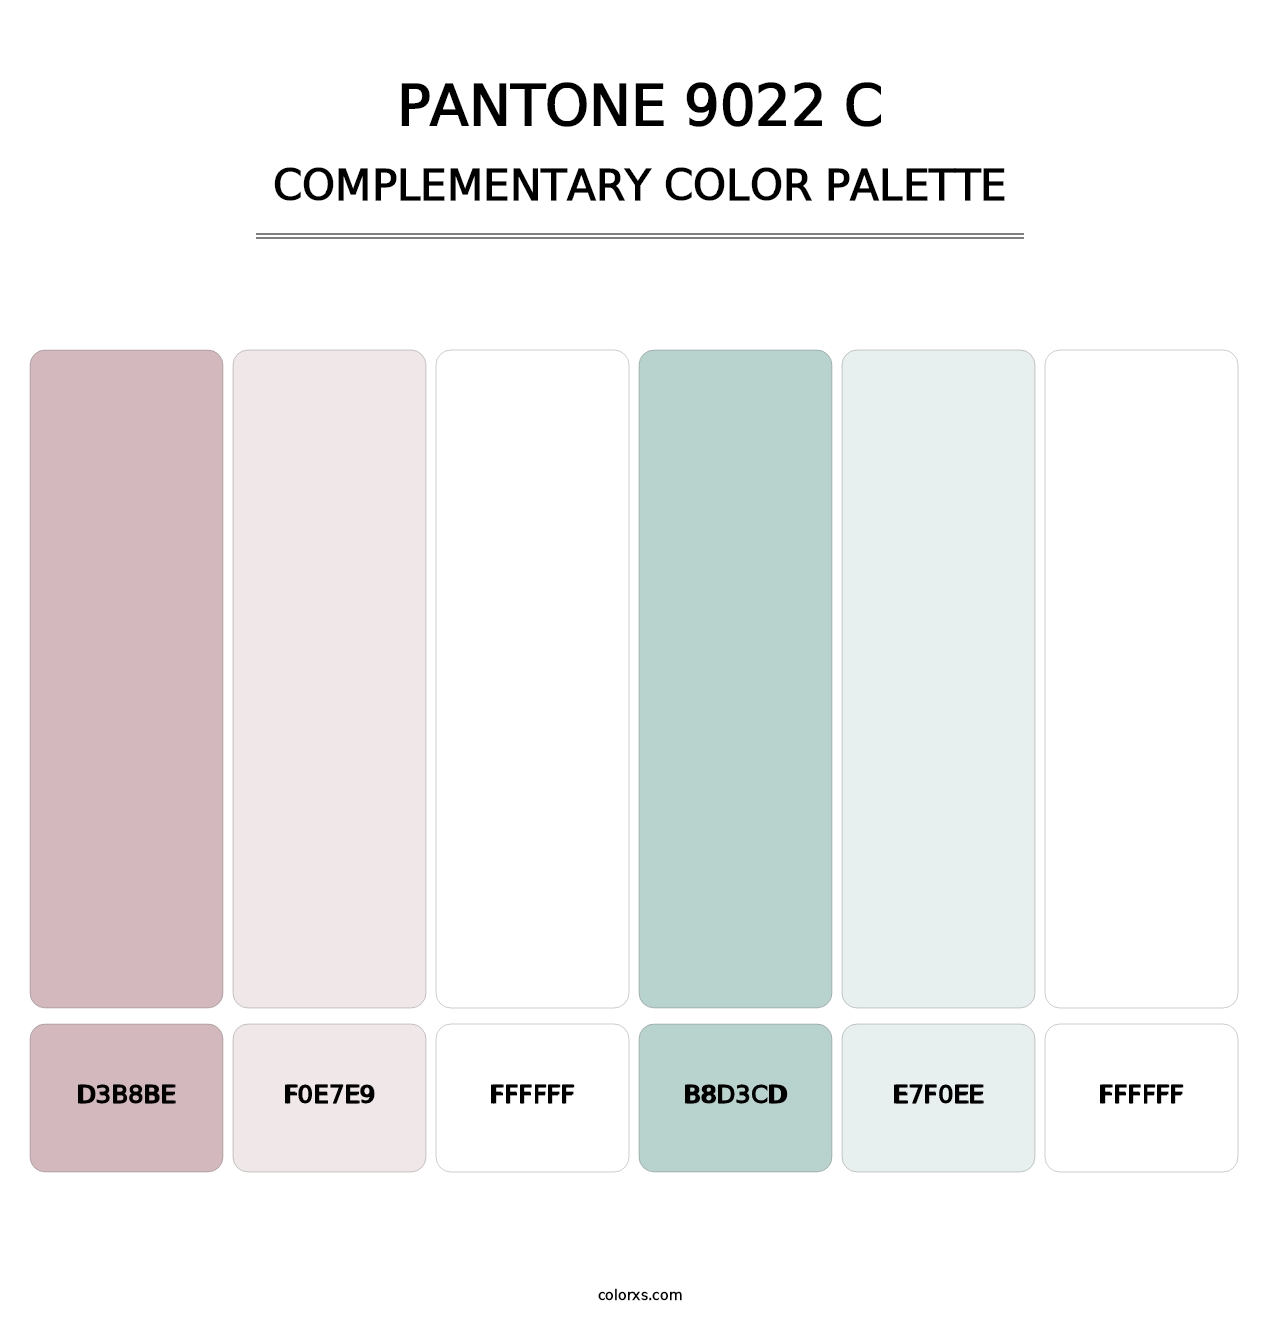 PANTONE 9022 C - Complementary Color Palette